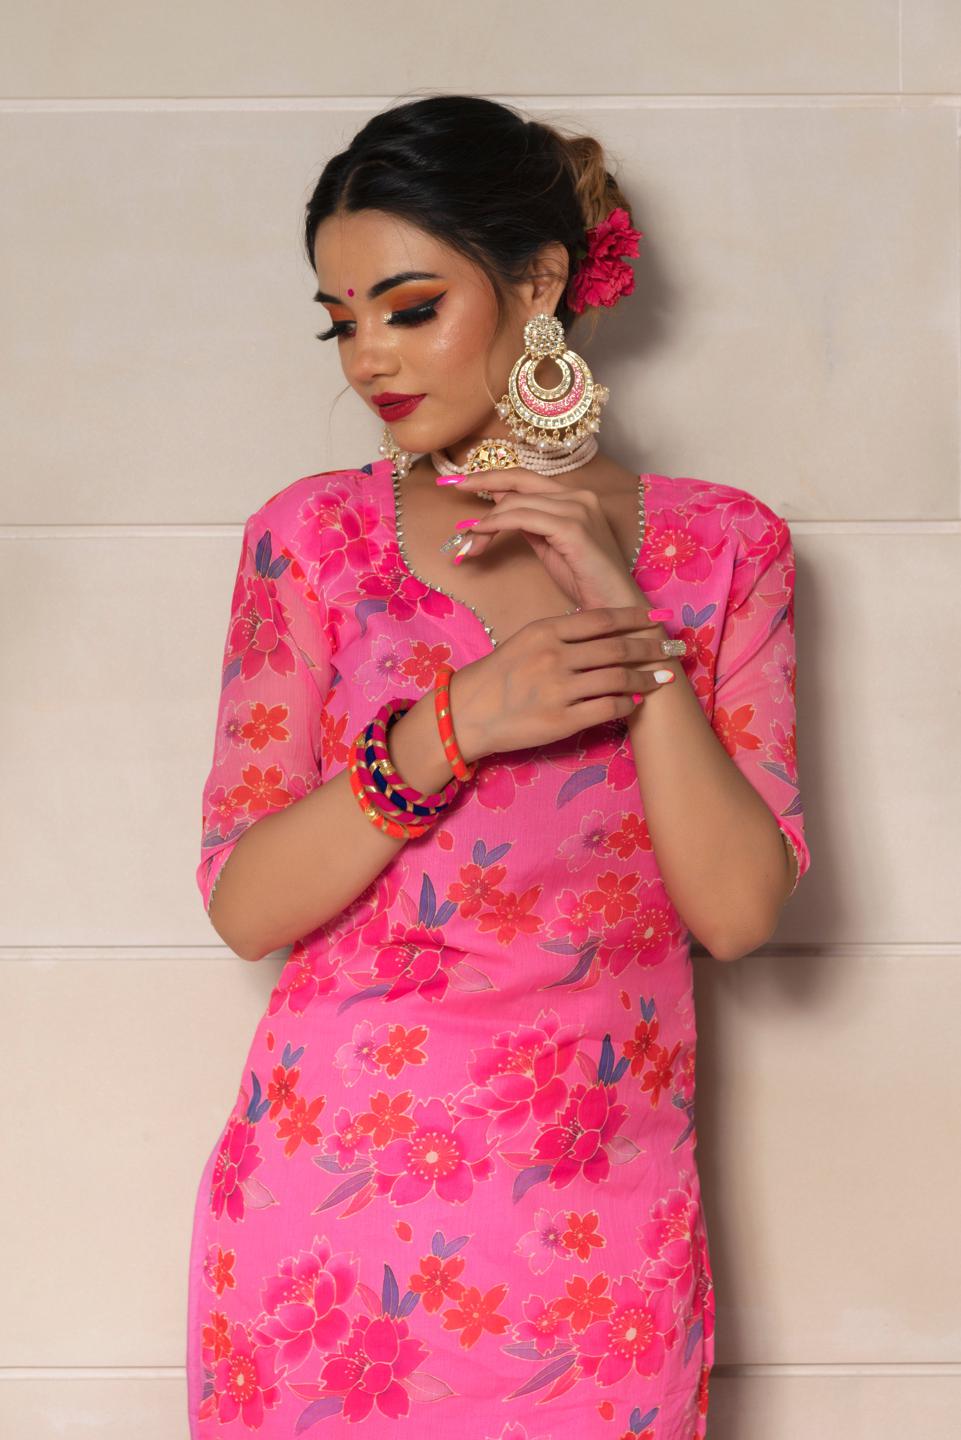 cosmos-pink-chinnon-chiffon-suit-set-11403216PK, Women Indian Ethnic Clothing, Chiffon Kurta Set Dupatta